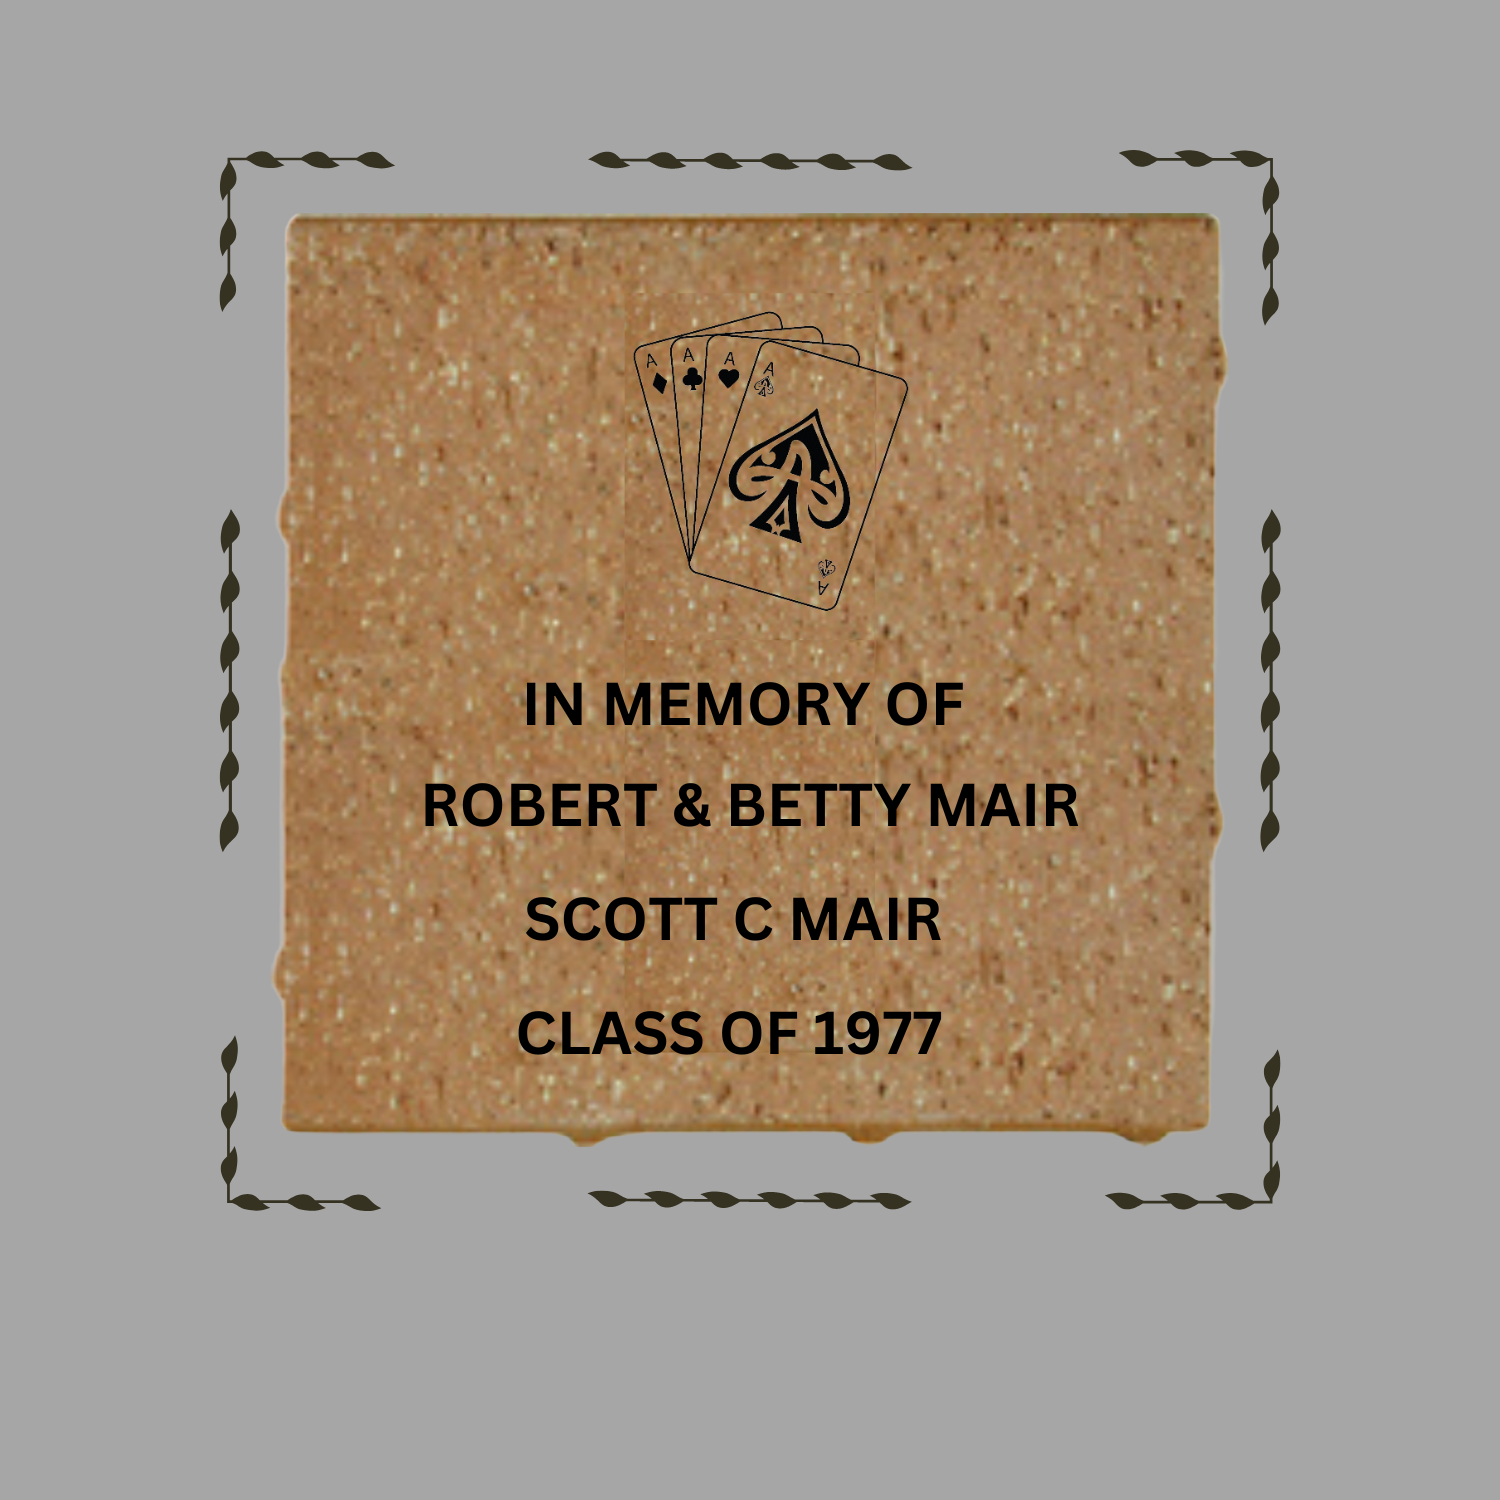 Scott Mair